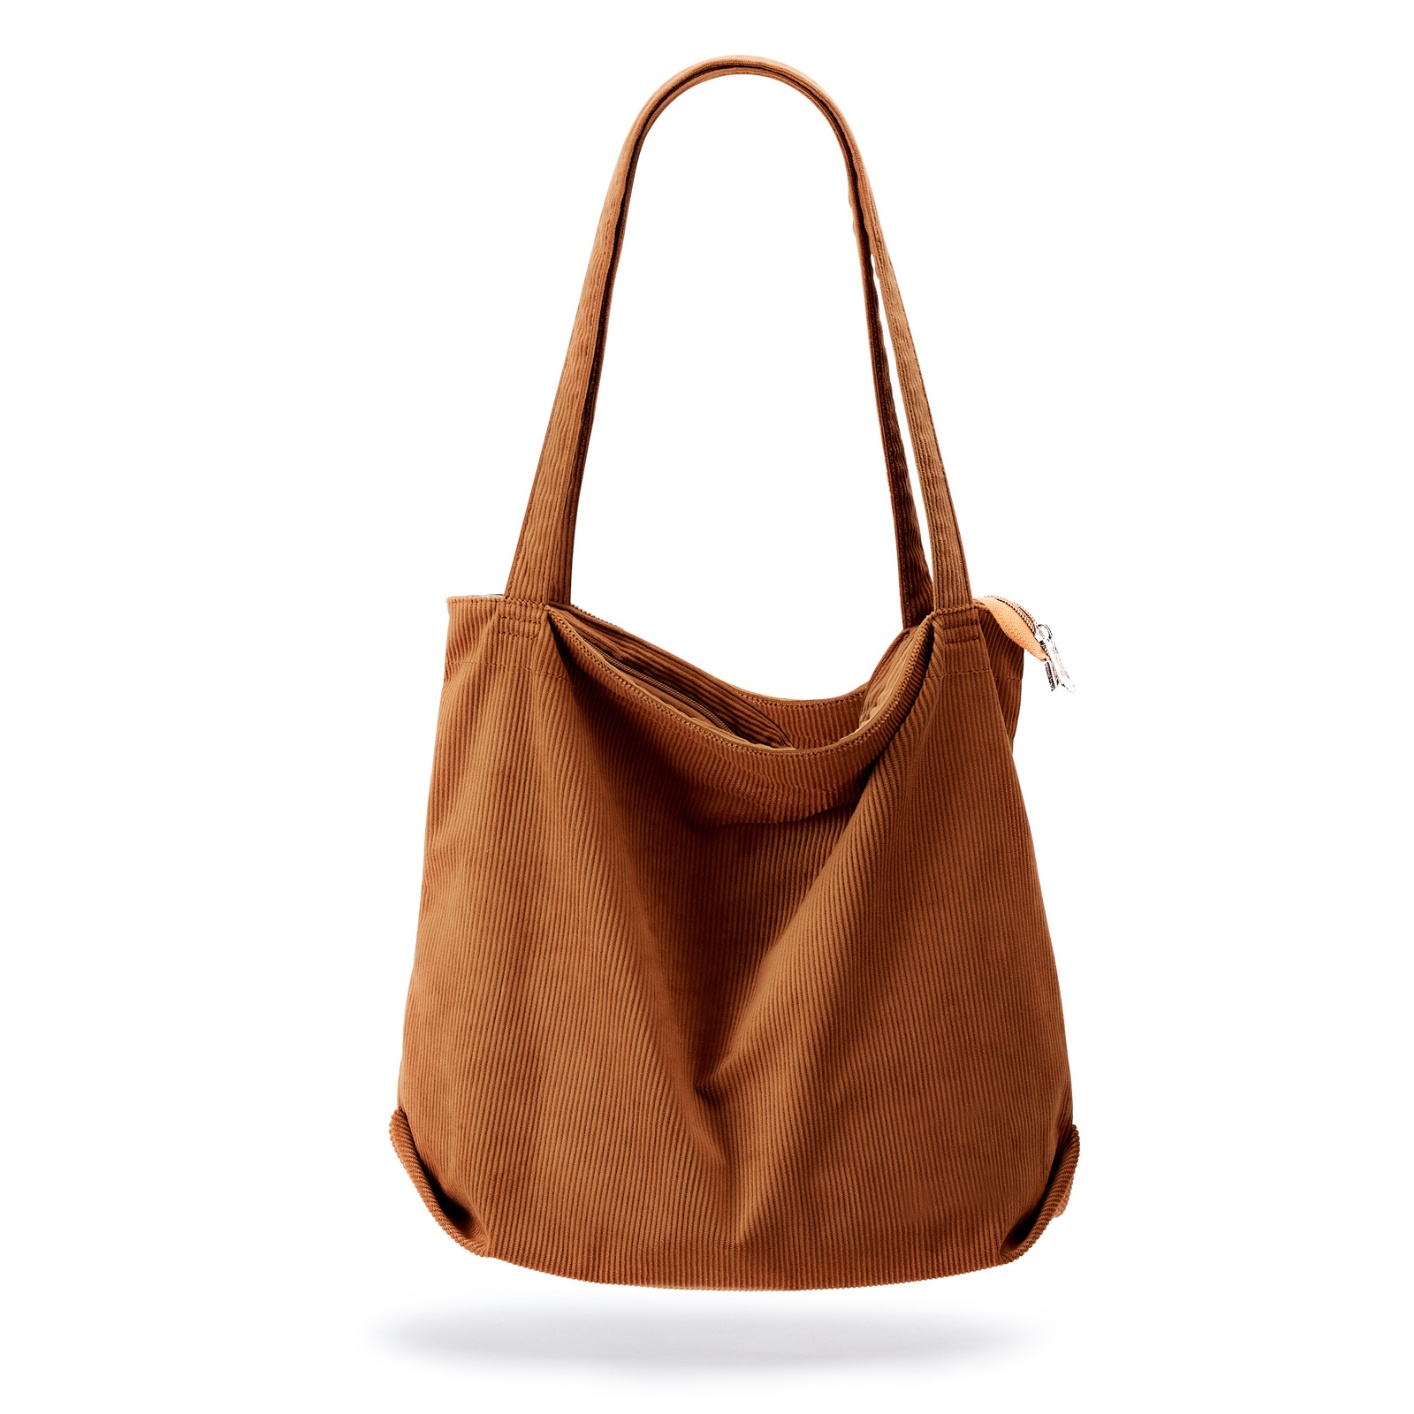 DXRB01 corduroy bag Women's satchel bag with zipper Simple retro everyday use girls shoulder bag